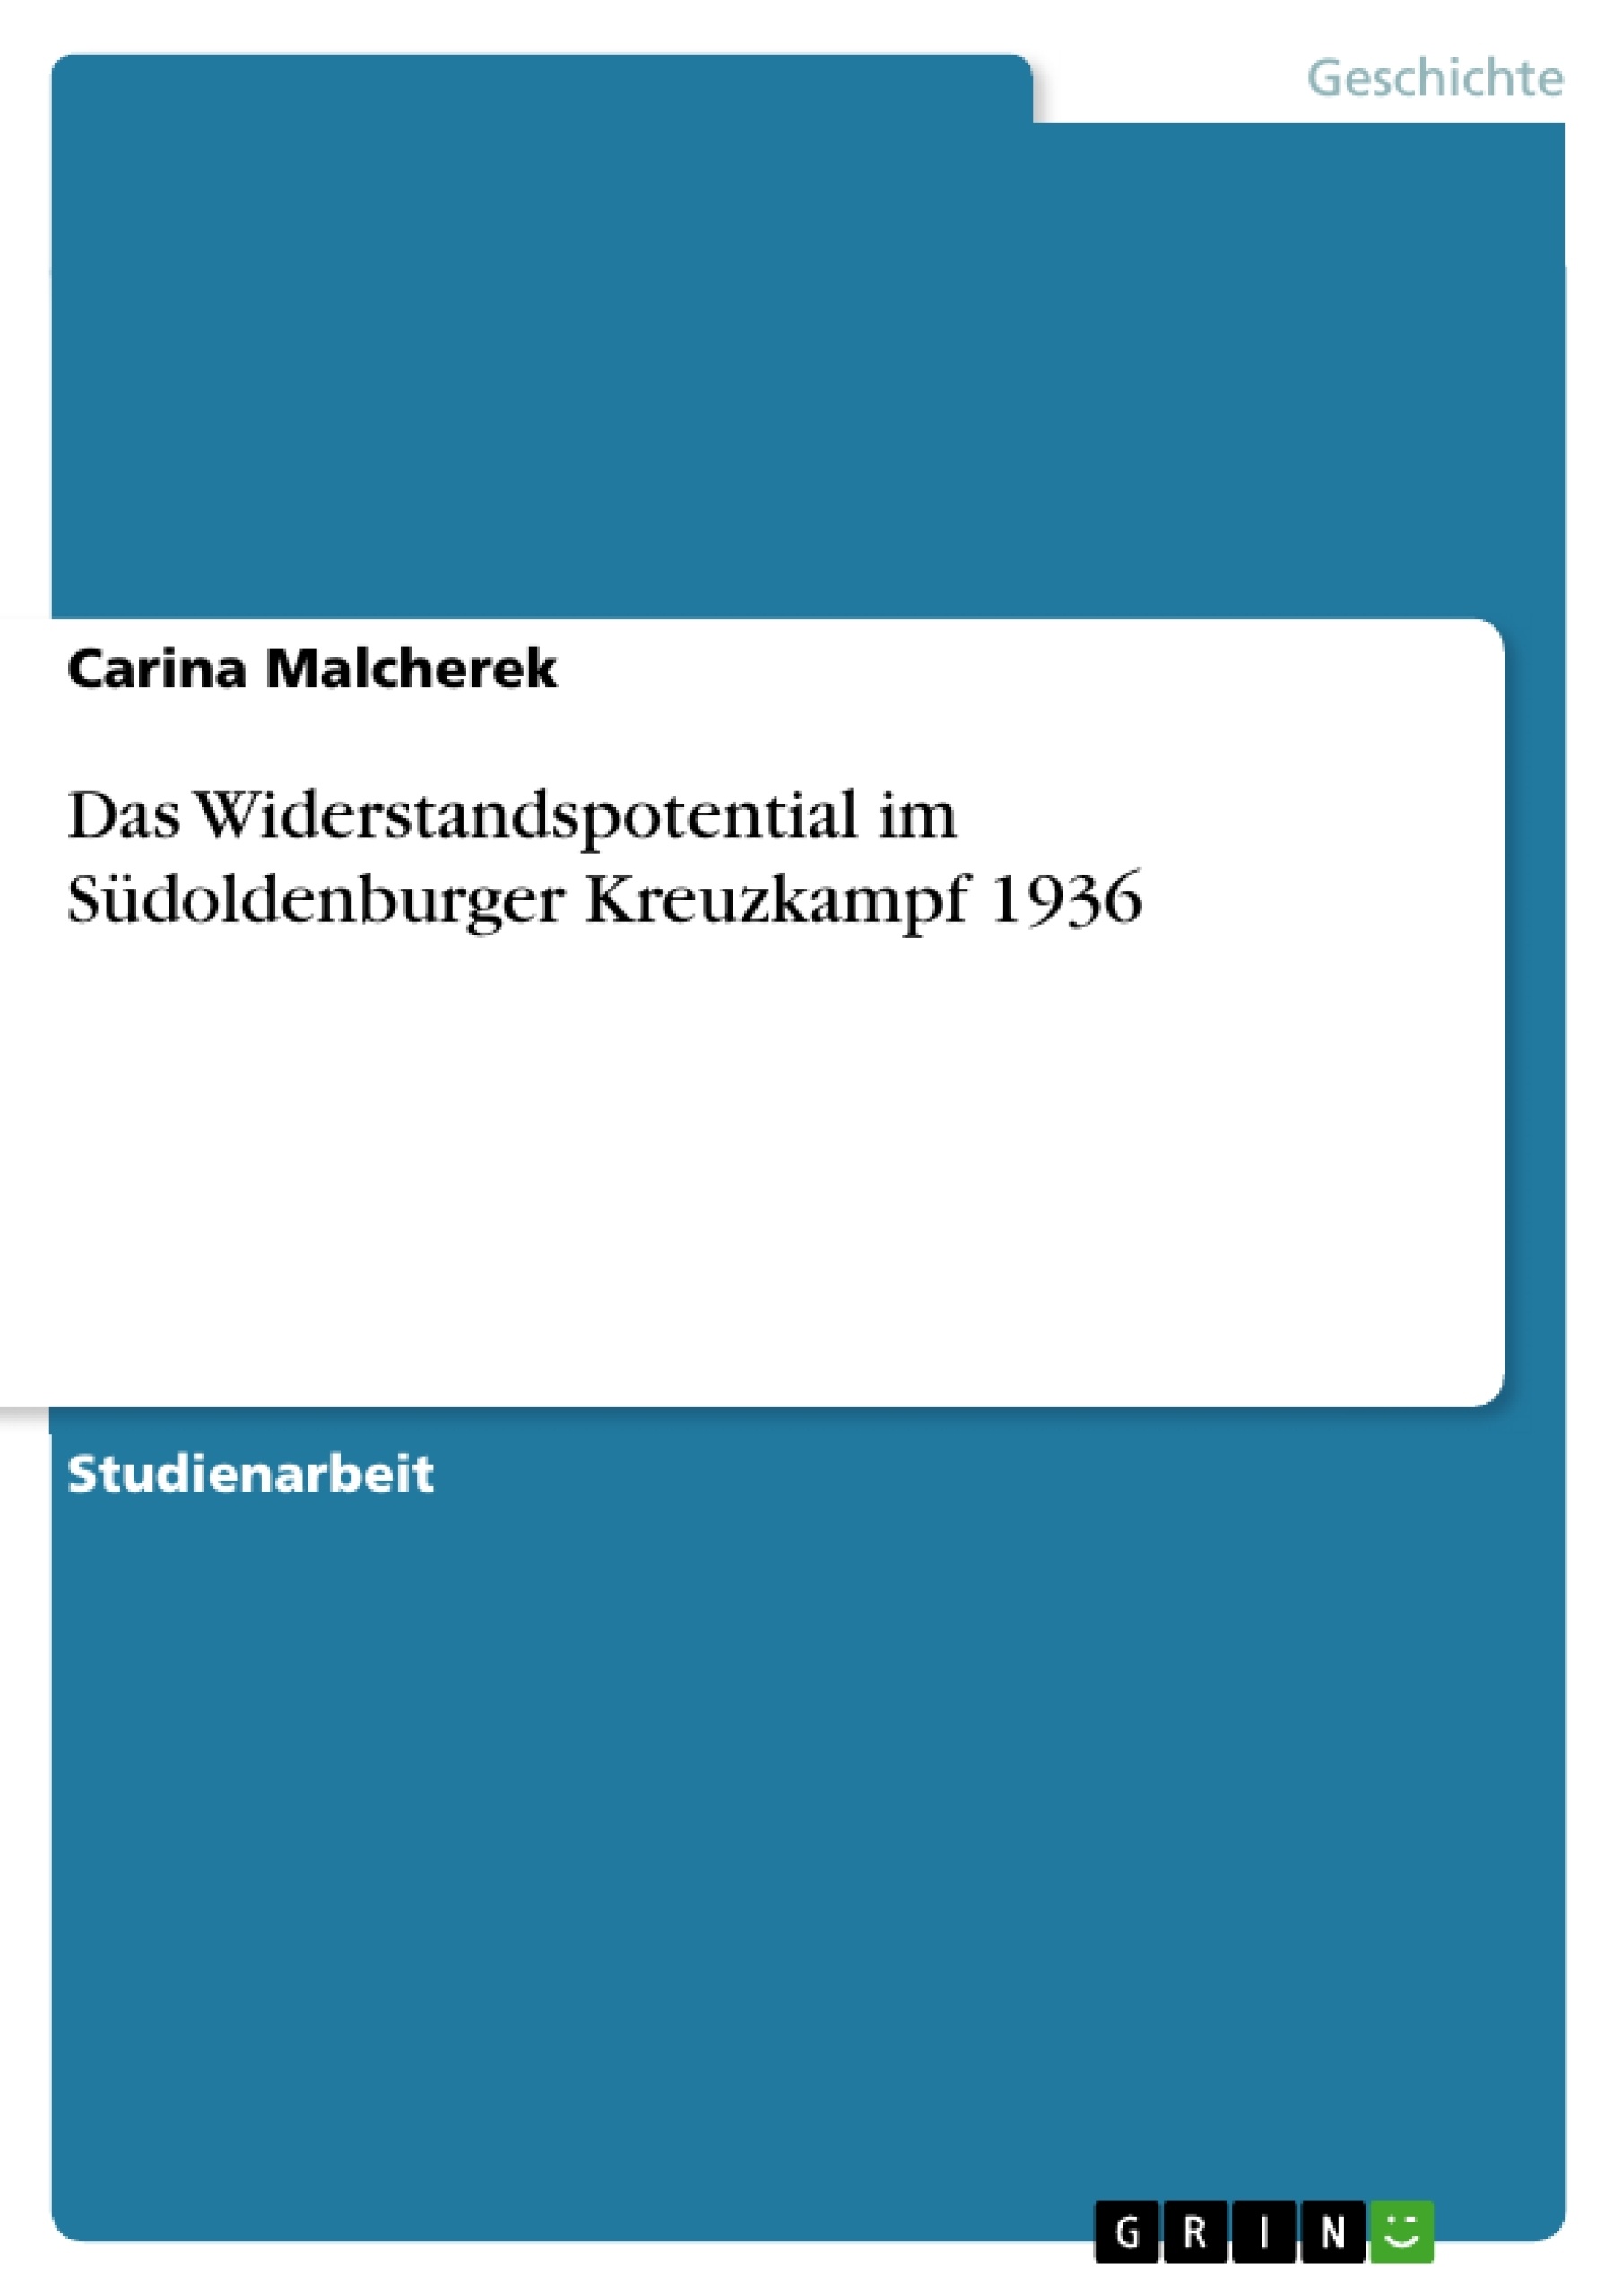 Título: Das Widerstandspotential im Südoldenburger Kreuzkampf 1936